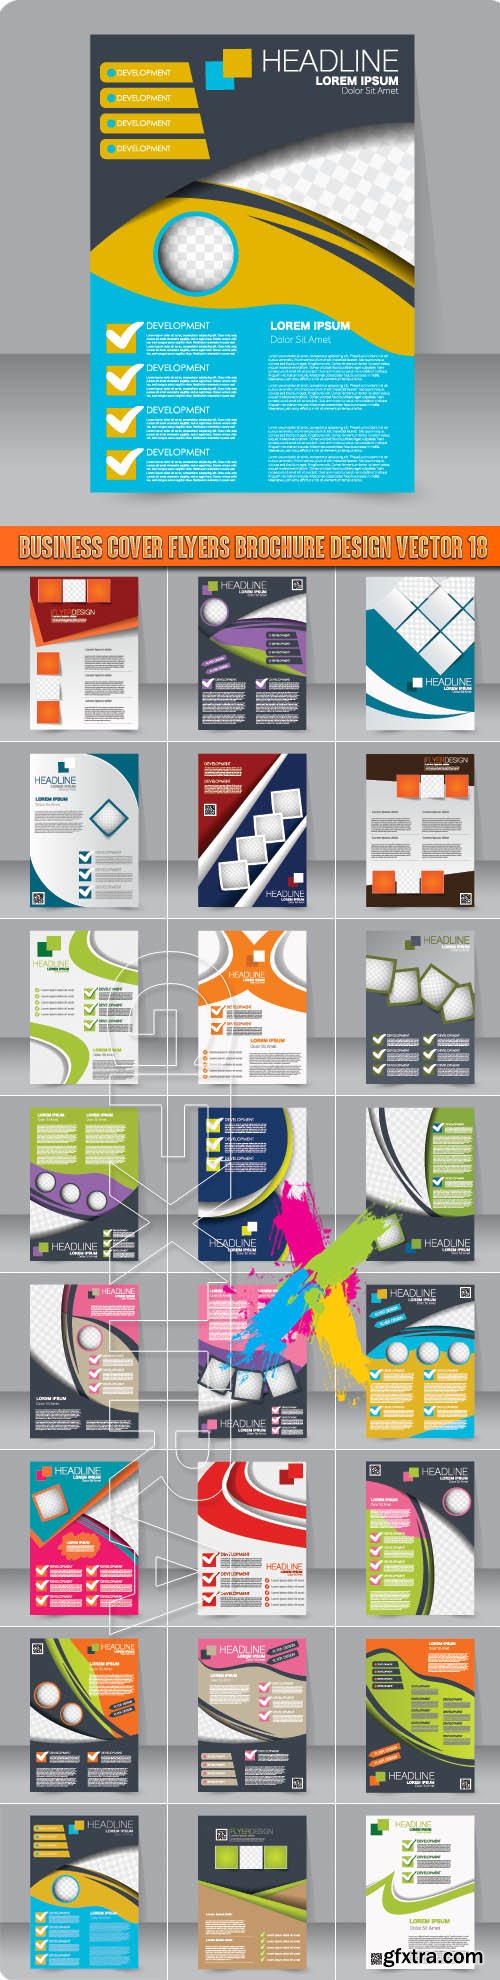 Business cover flyers brochure design vector 18